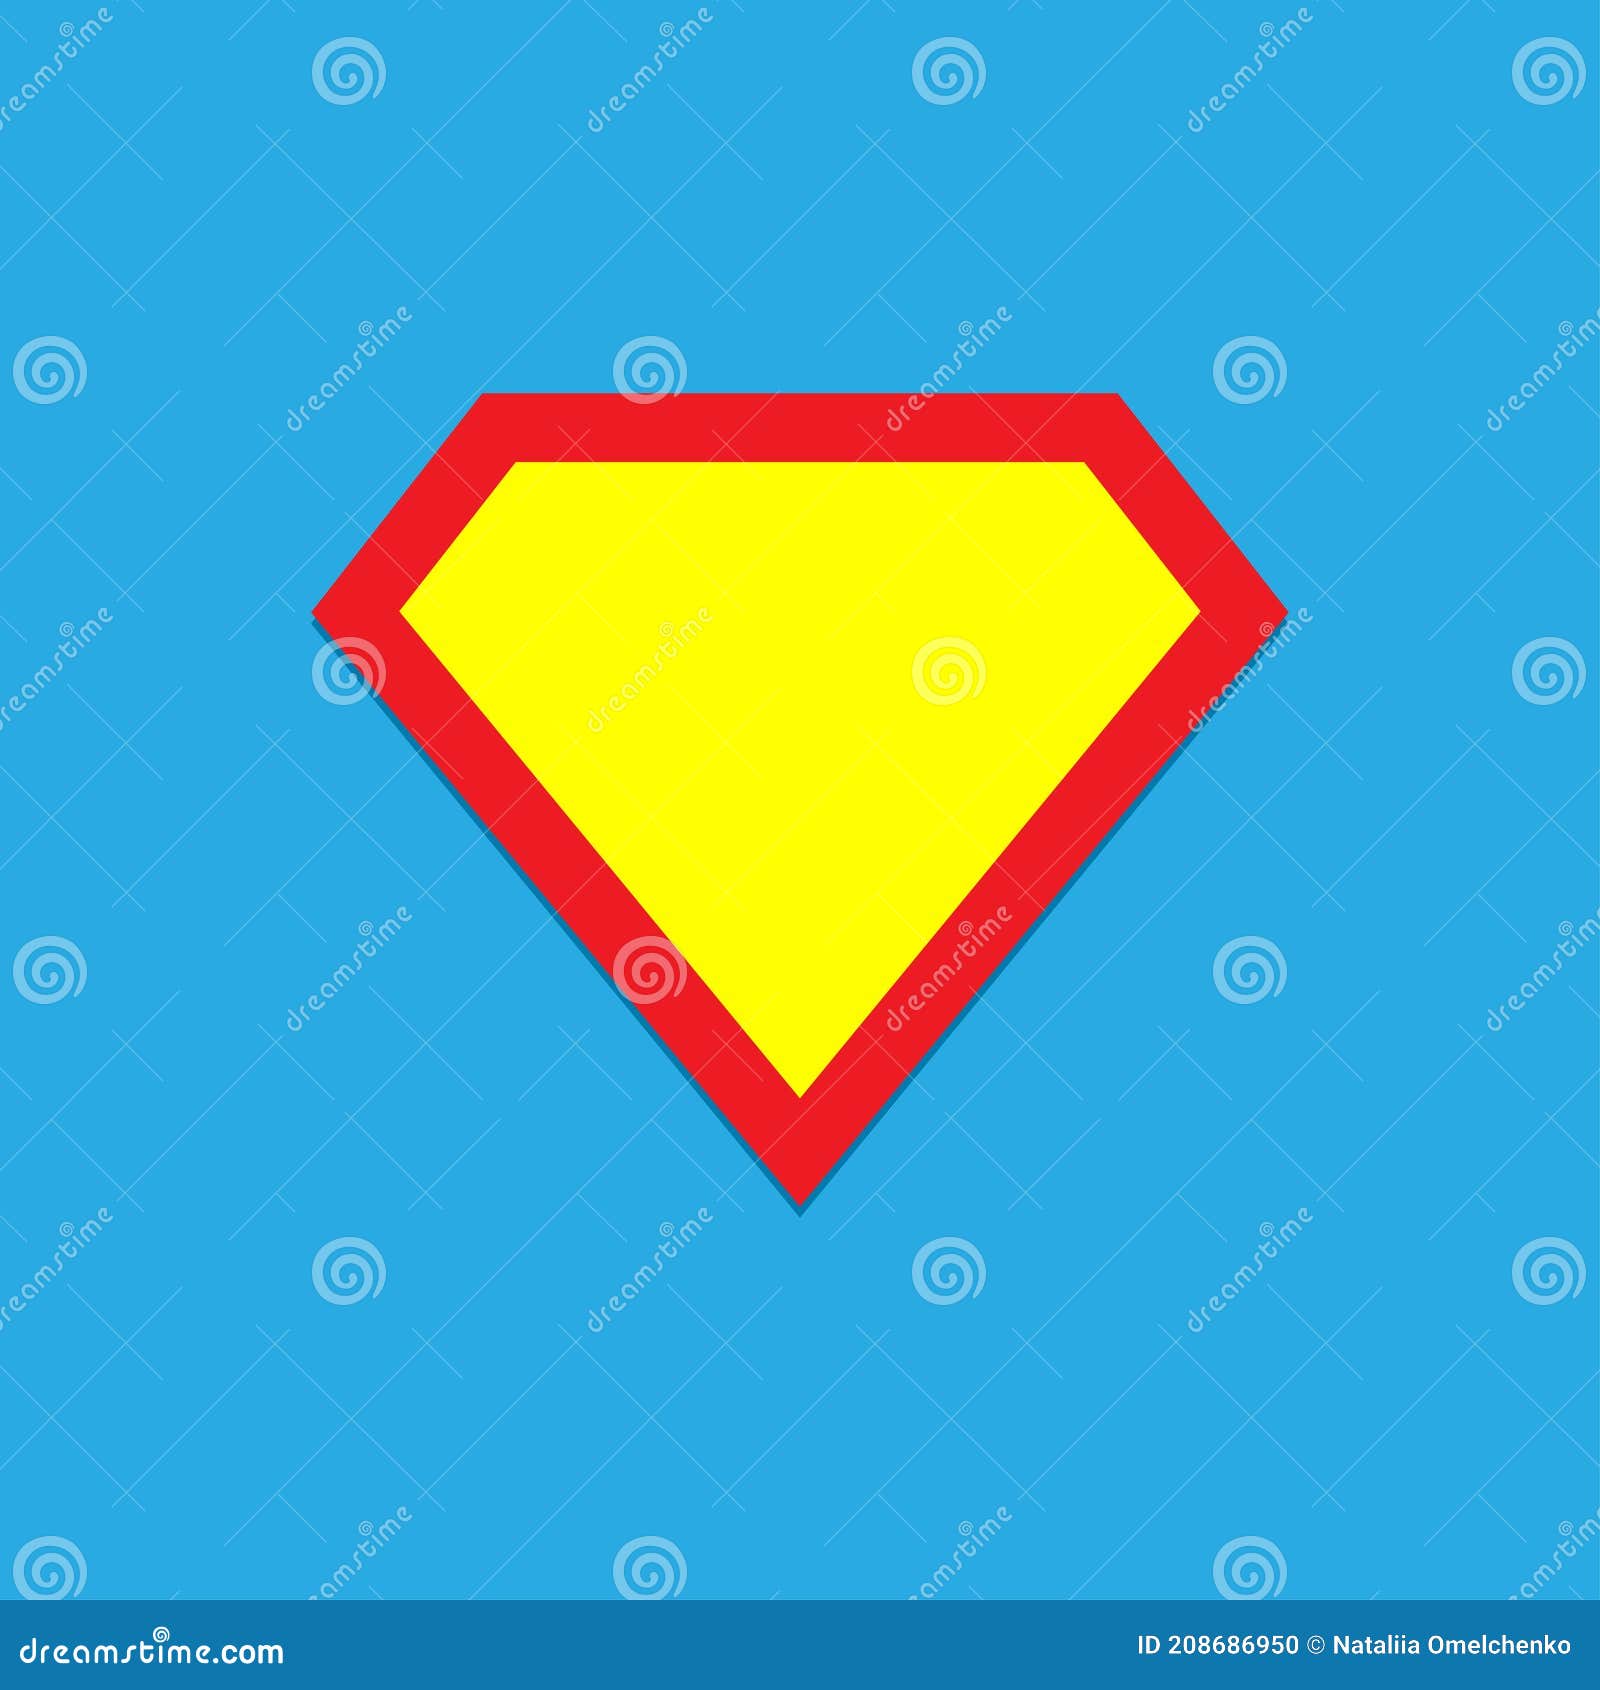 Superhero Vector Icon Isolated on Blue Background. Superman Logo ...